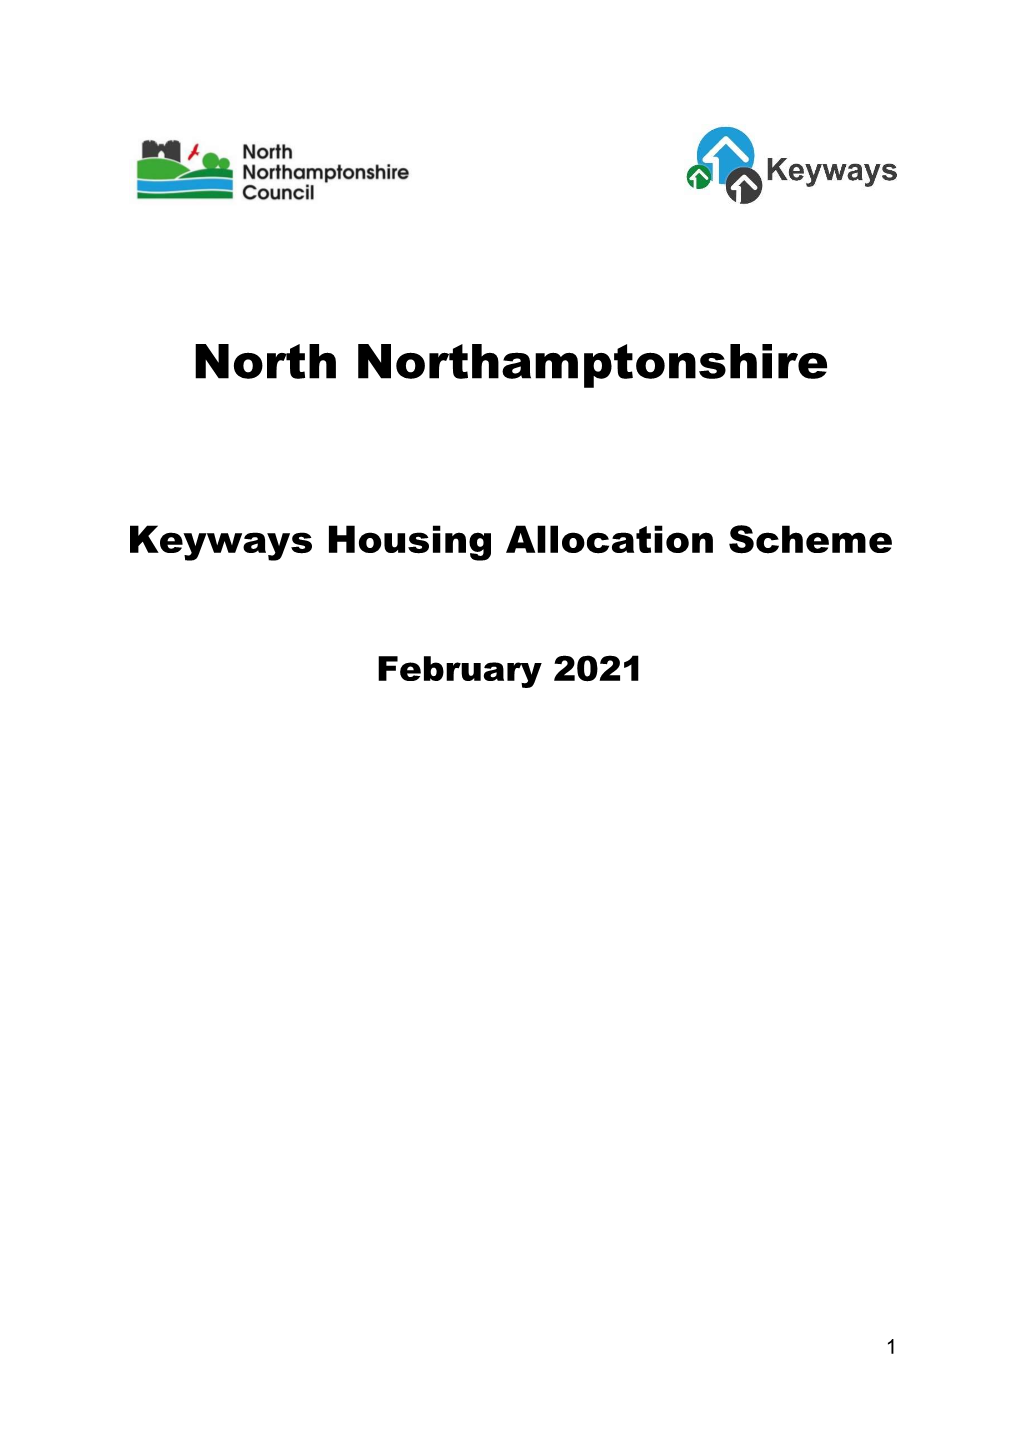 North Northamptonshire Keyways Housing Allocation Scheme